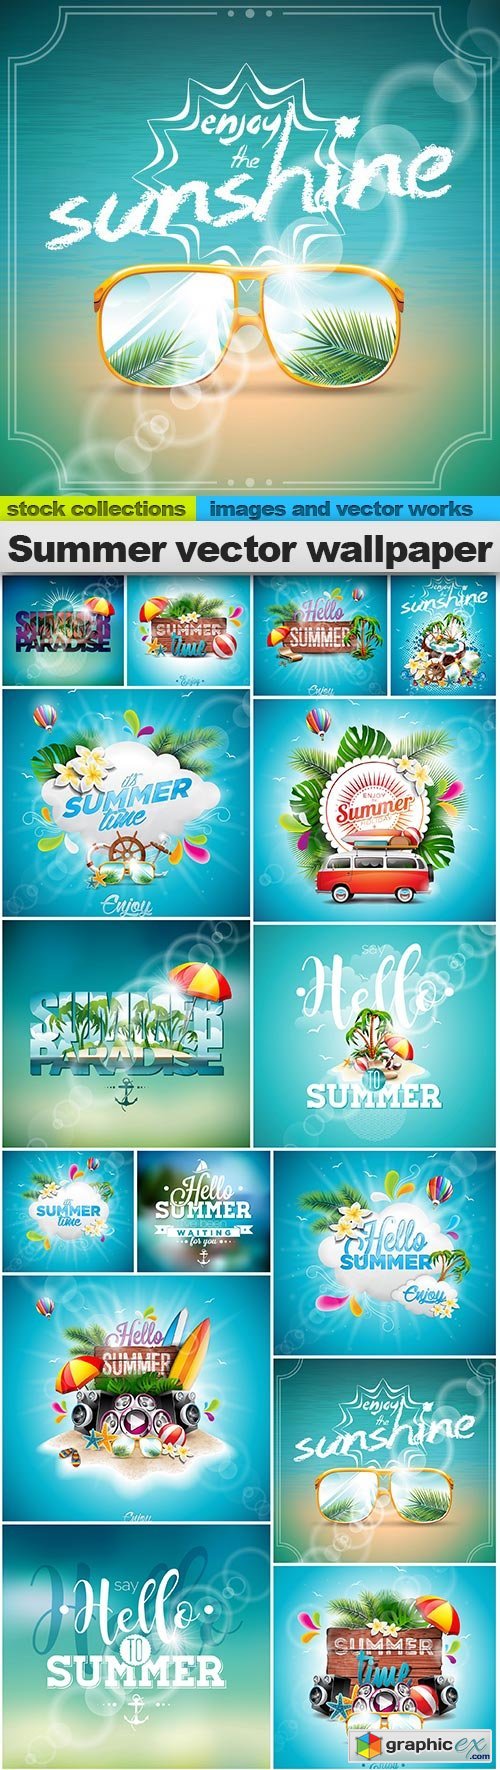 Summer vector wallpaper, 15 x EPS